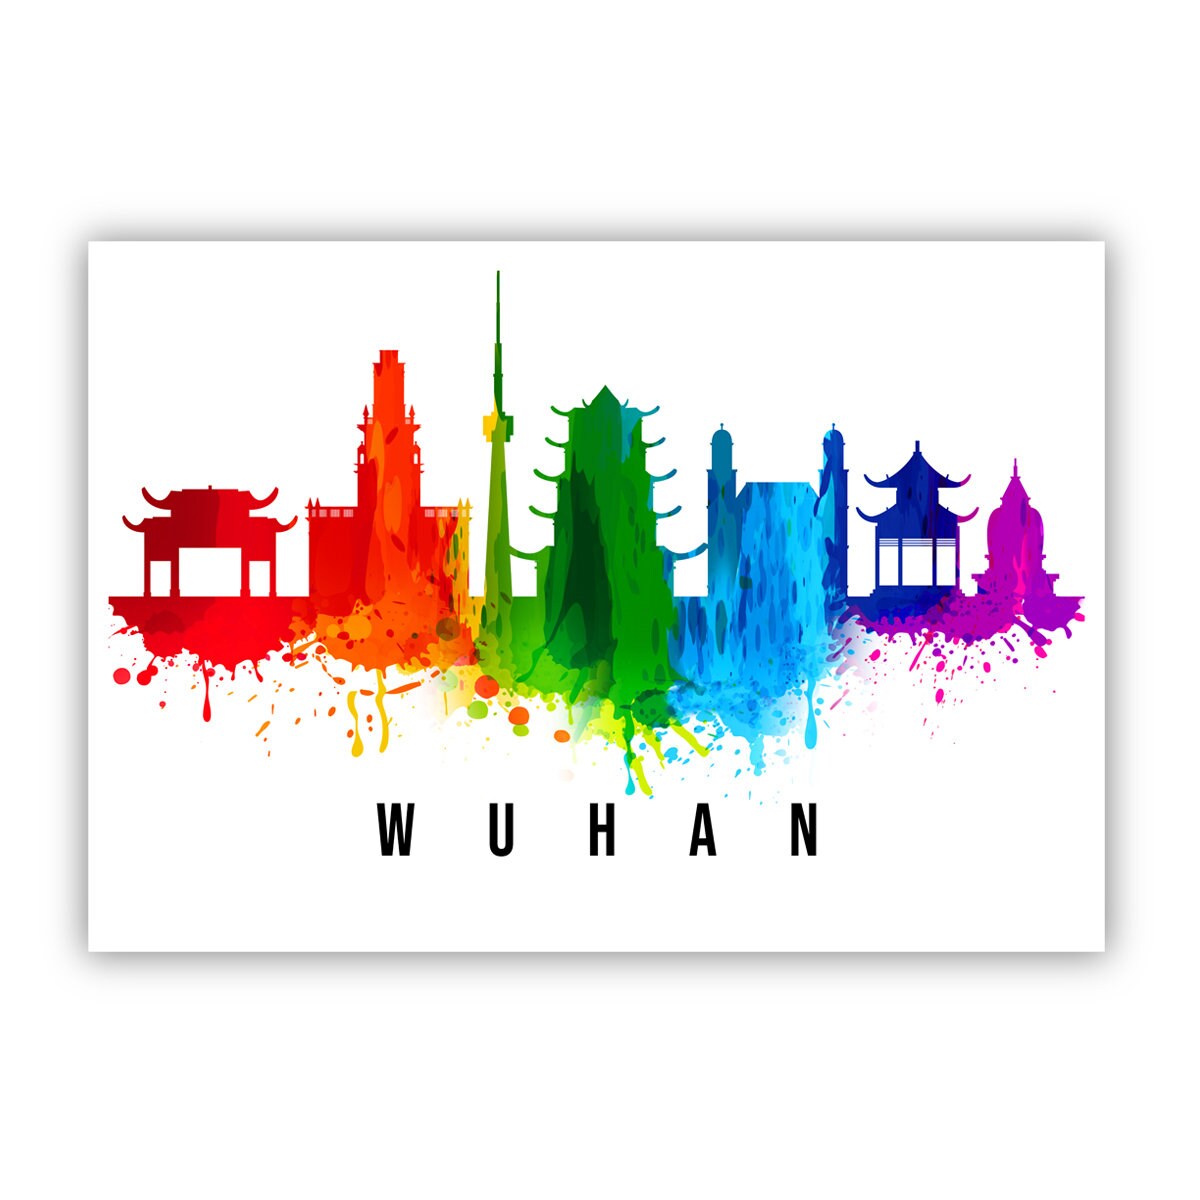 Pera Print, Wuhan China skyline poster, China poster, Illustration skyline world city poster, Cityscape landmark print, Office wall art